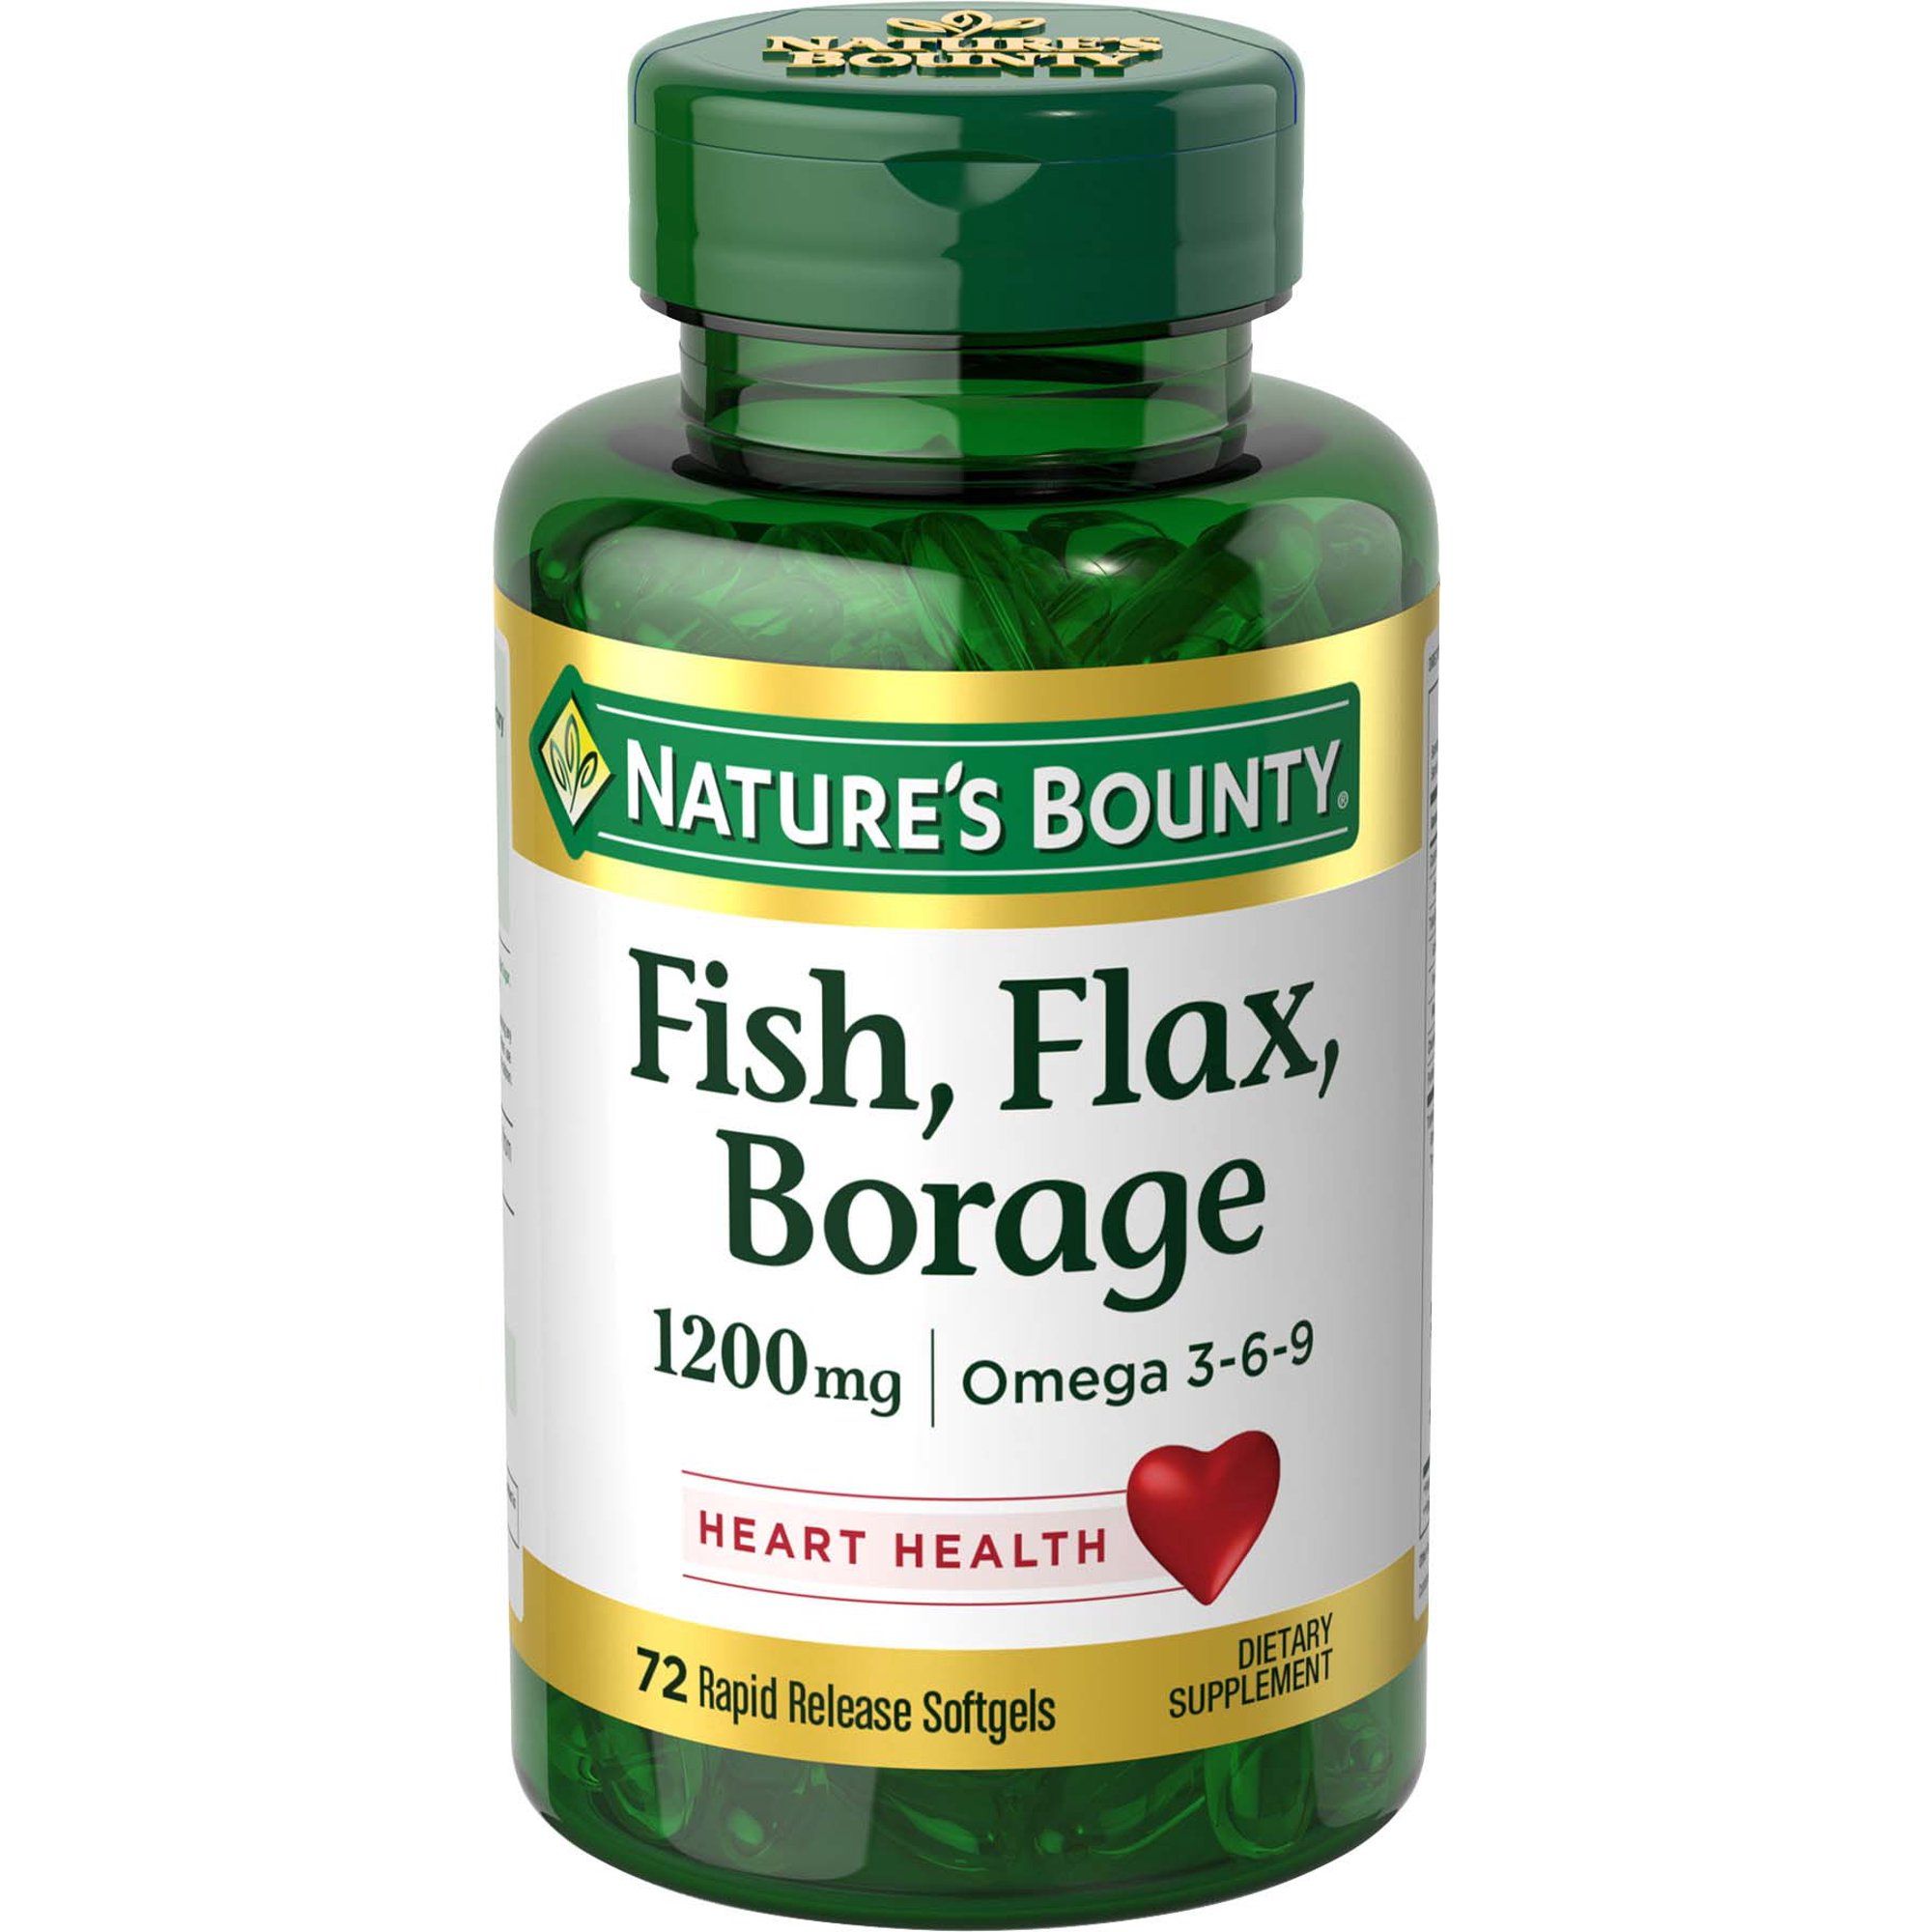 Nature's Bounty Fish, Flax, Borage 1200 mg + Omega 3-6-9 Softgels - 72 ct